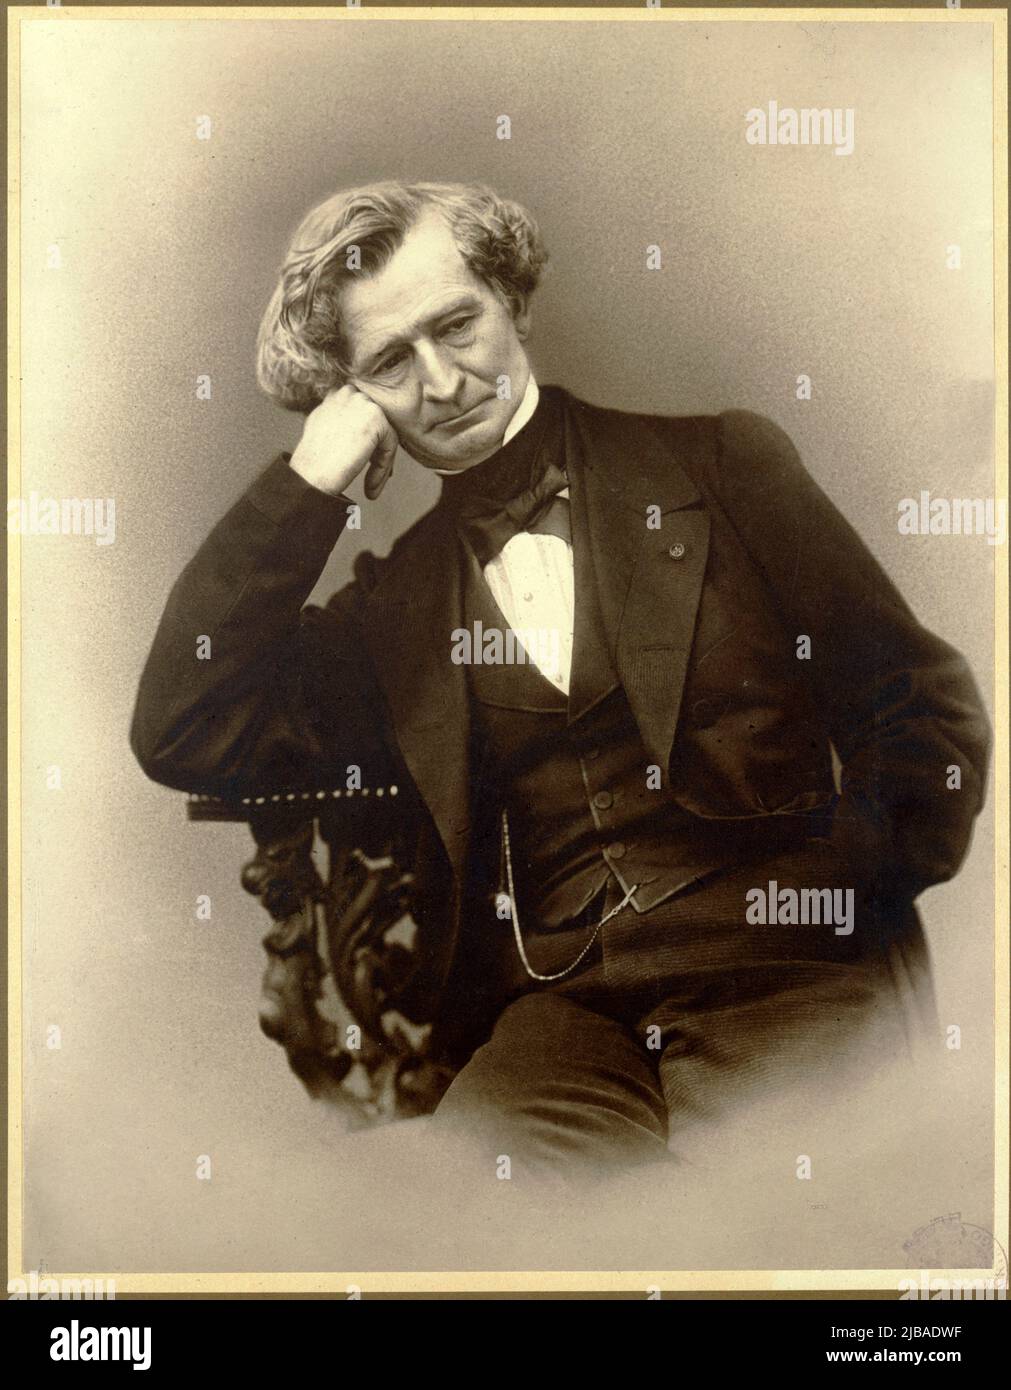 Hector Berlioz by Nadar (Gaspard-Félix Tournachon)  in 1863 Stock Photo